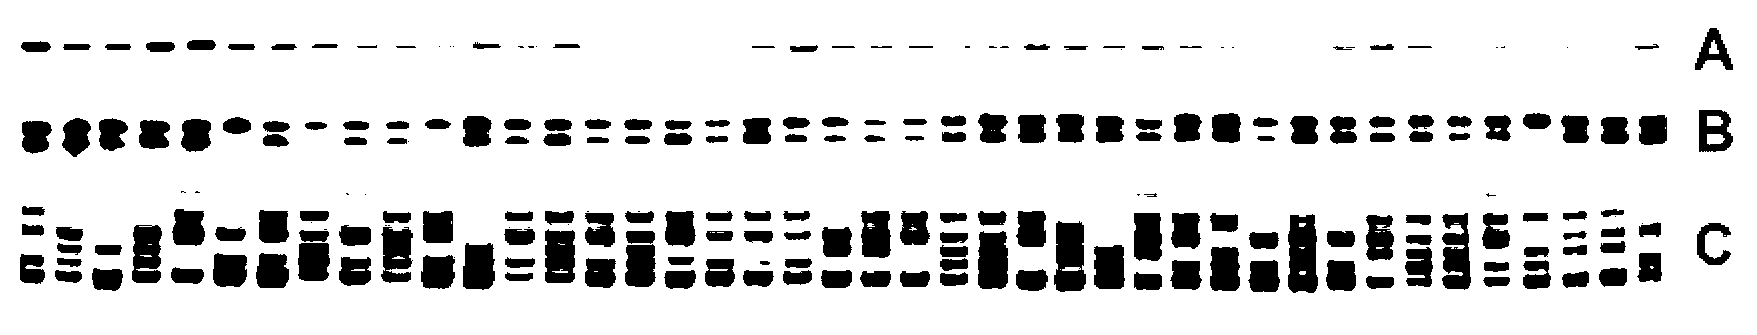 Development method of chrysanthemum SSR (Simple Sequence Repeat) primer